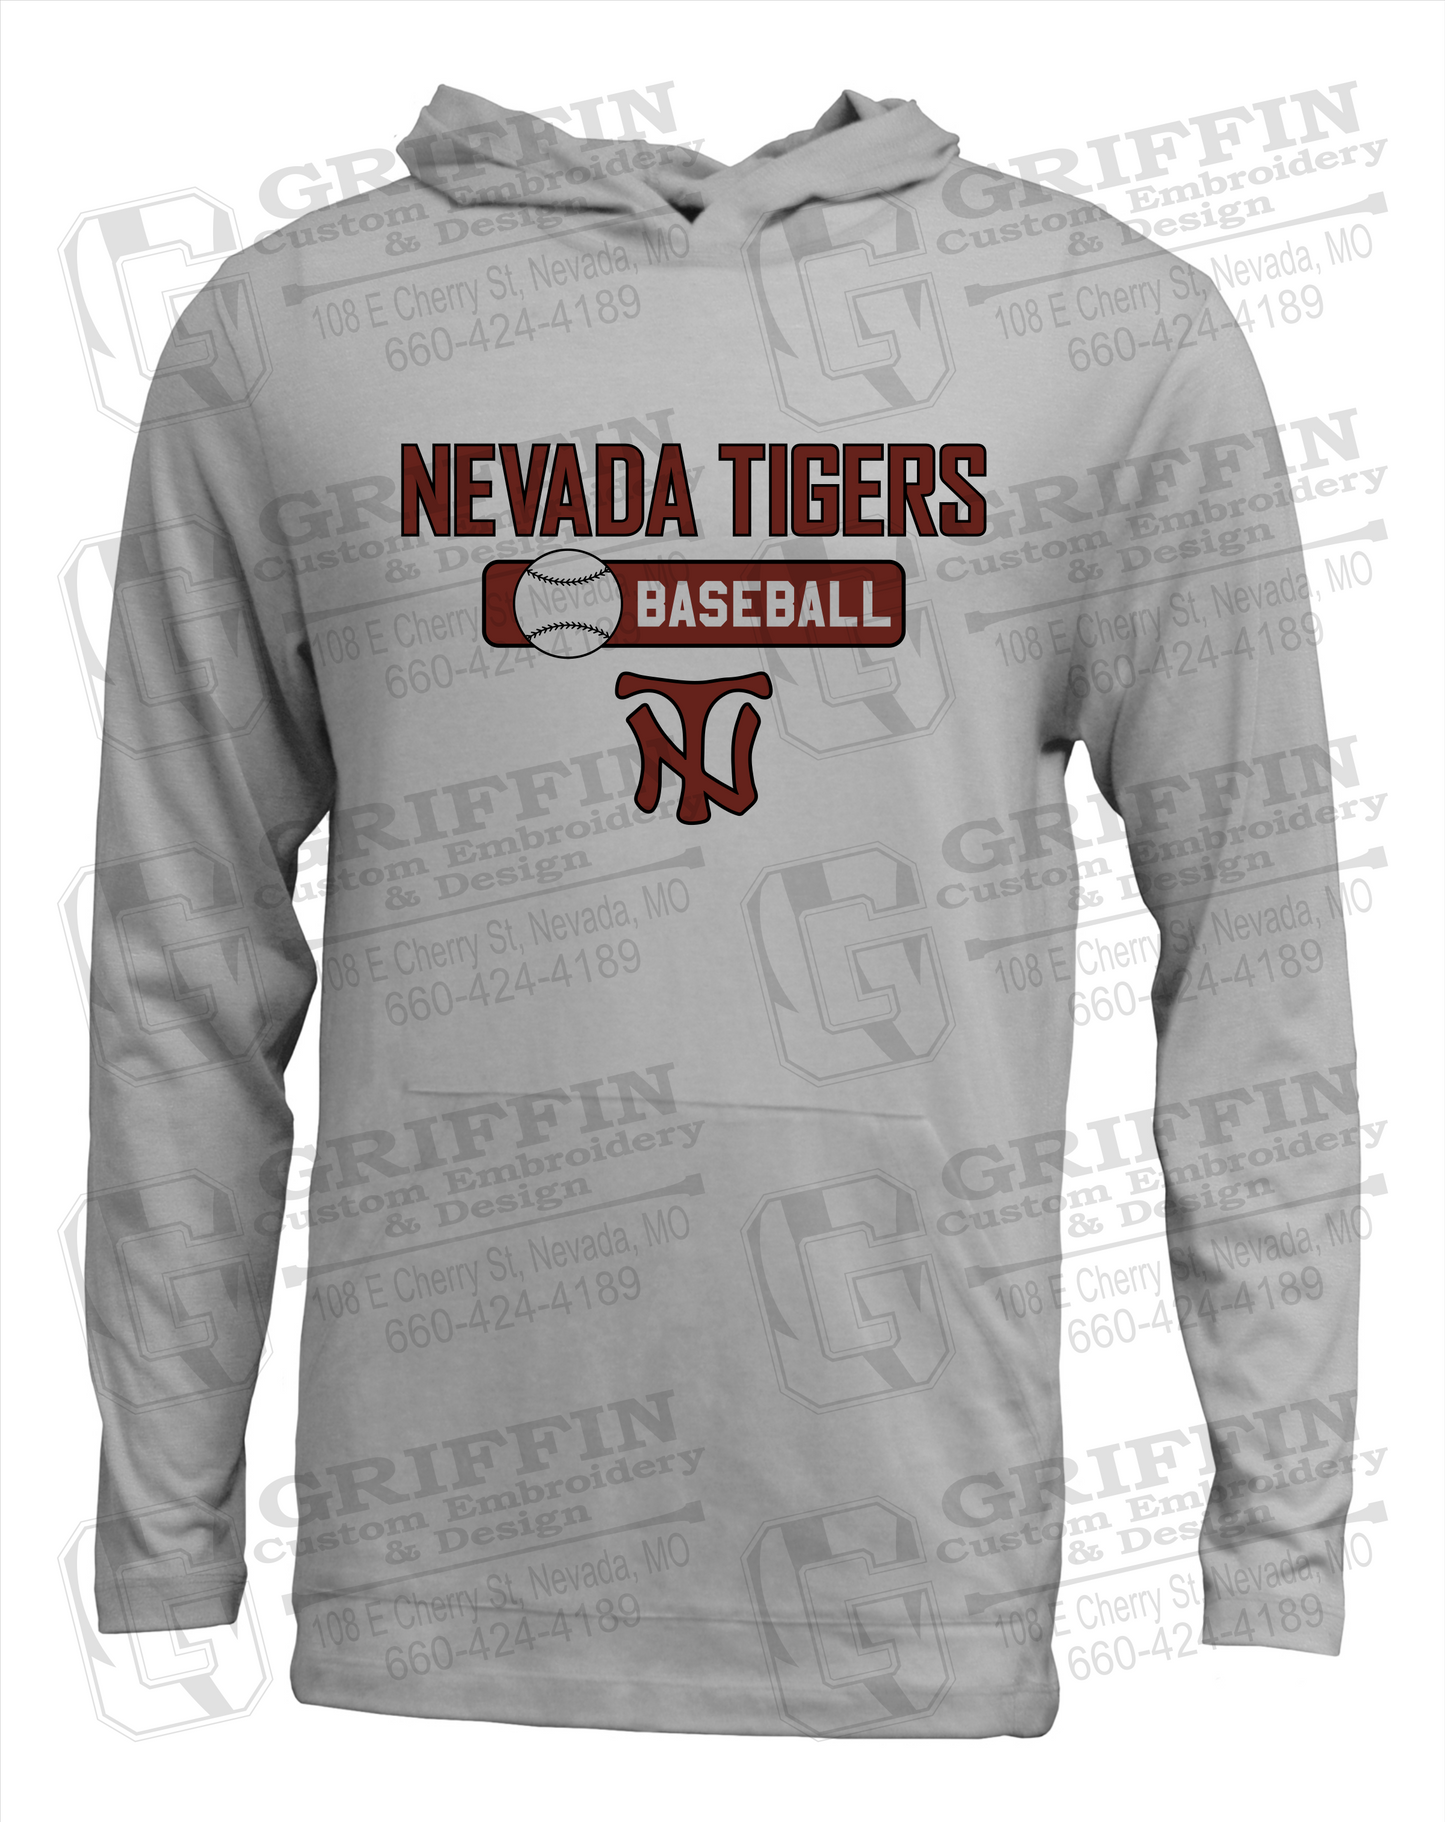 Soft-Tek T-Shirt Hoodie - Baseball - Nevada Tigers 24-S